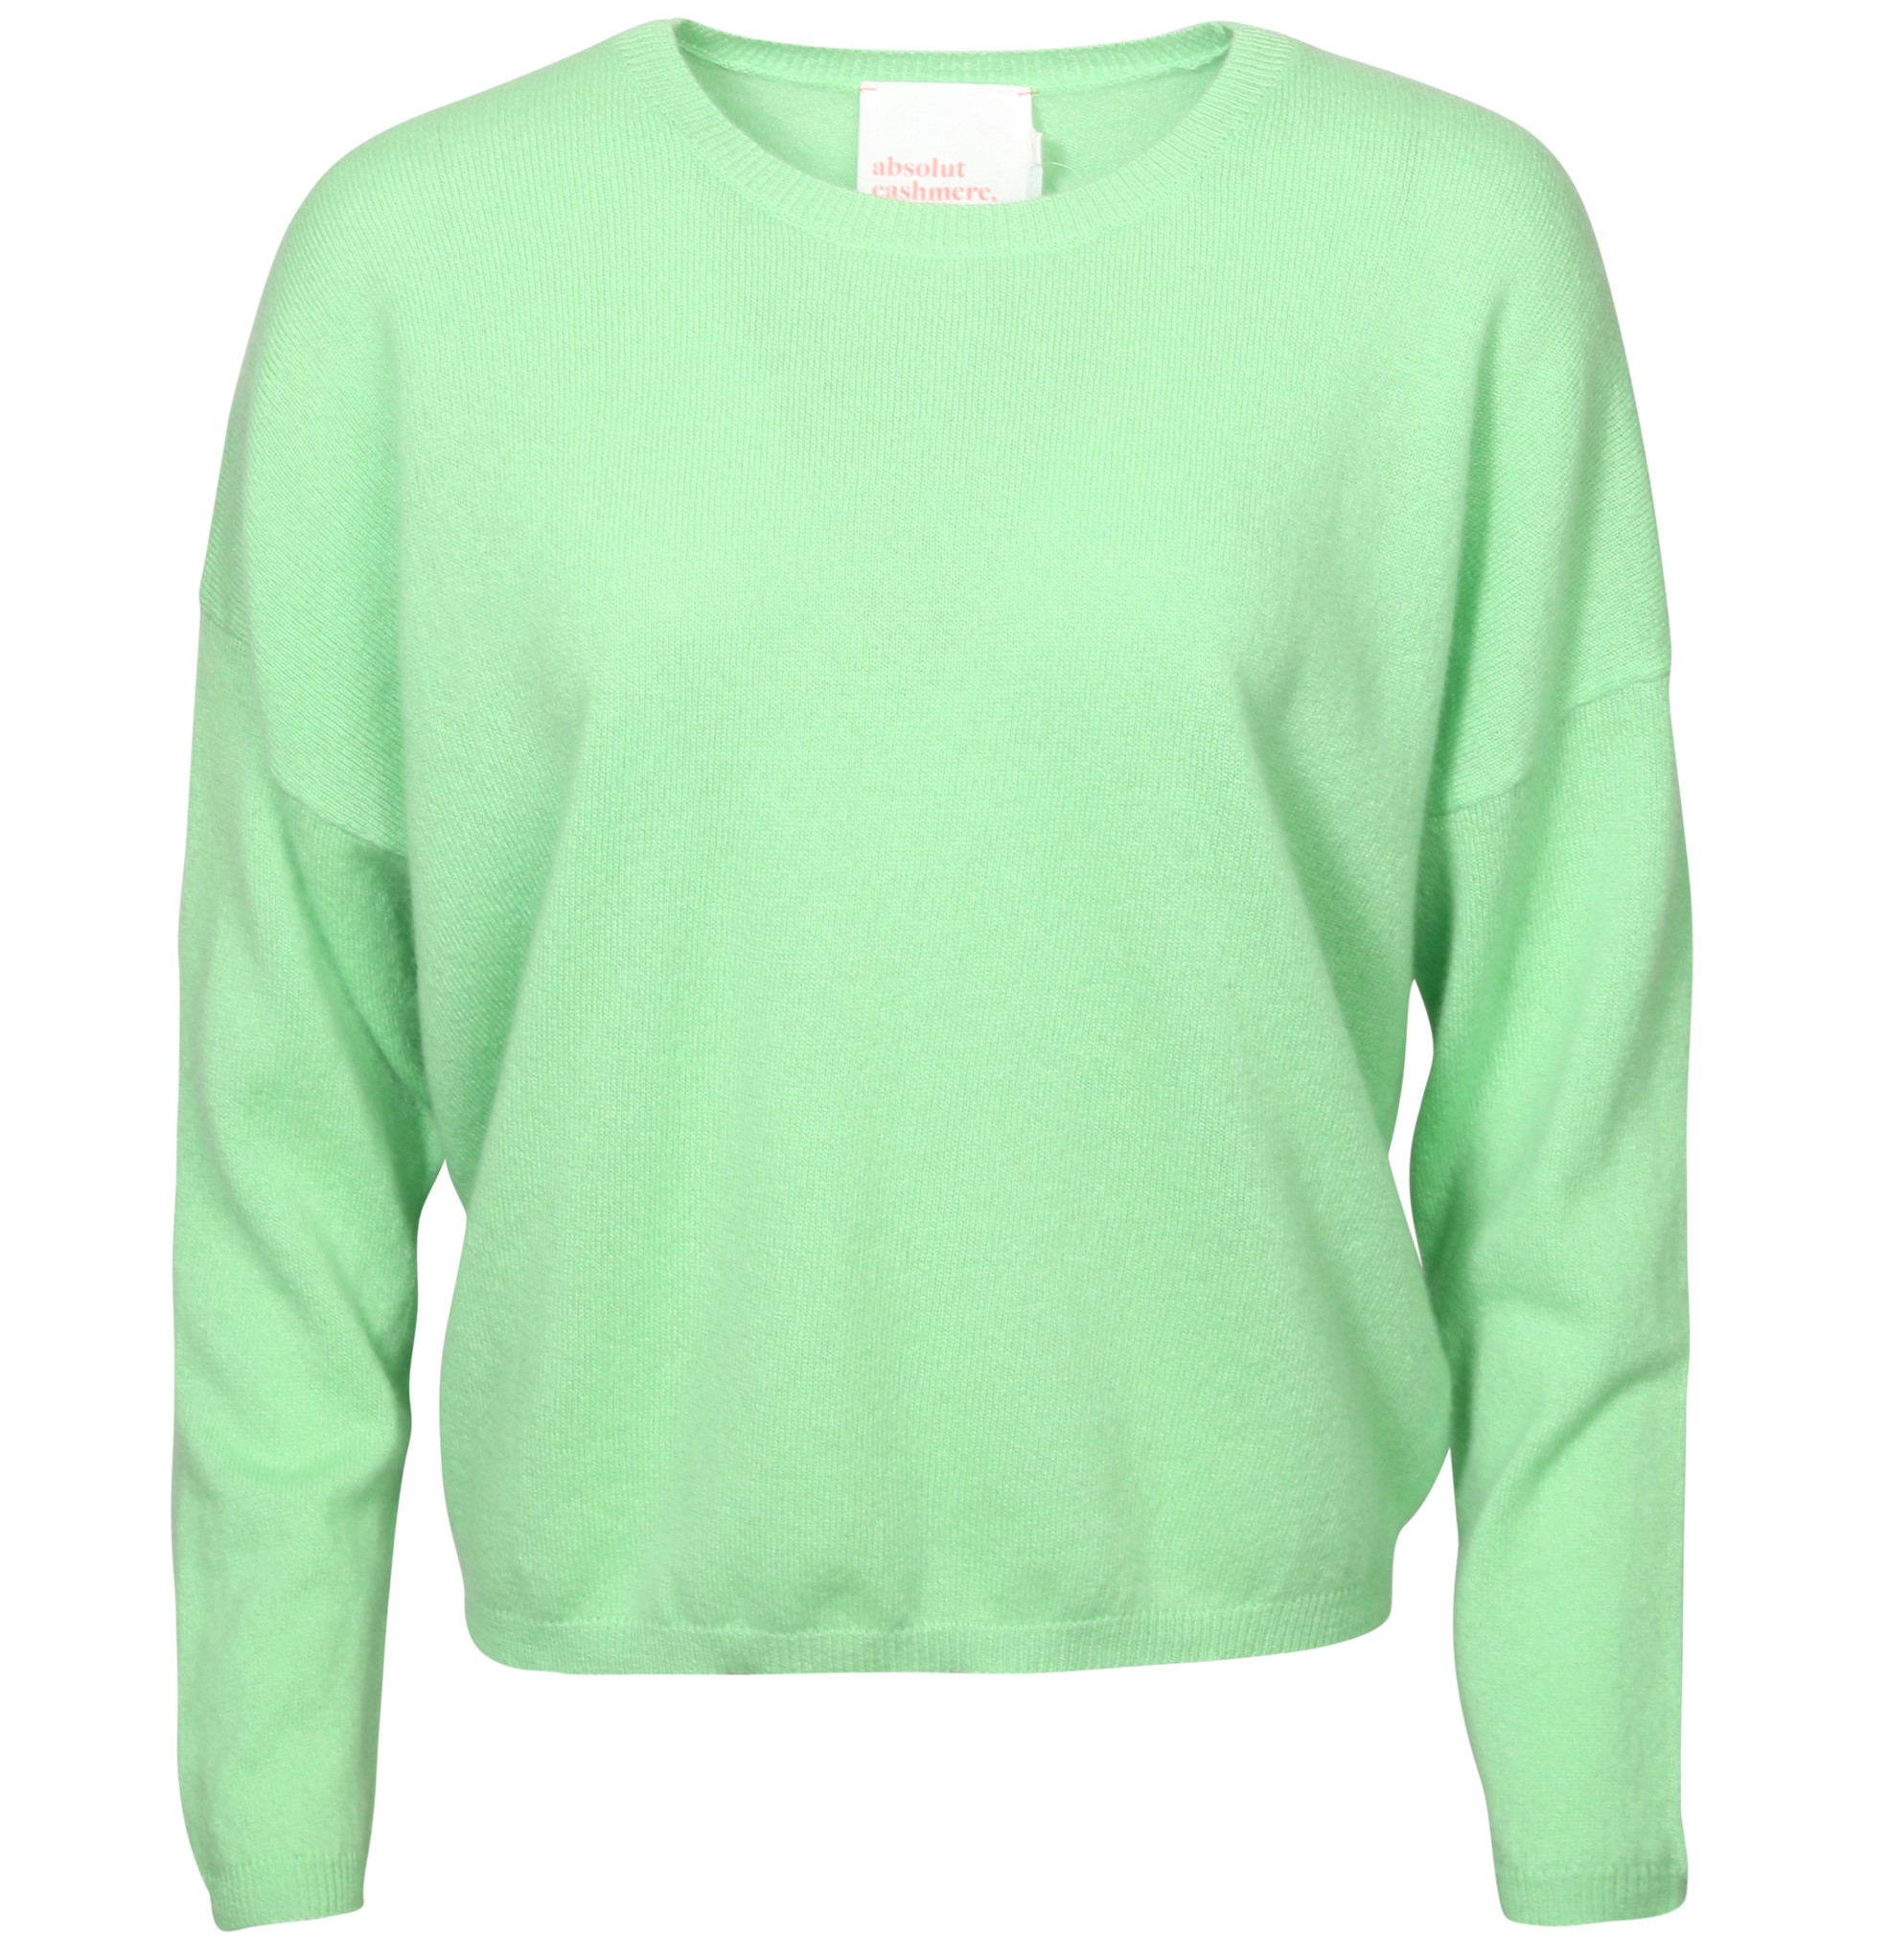 ABSOLUT CASHMERE Round Neck Sweater Kaira in Light Green XS